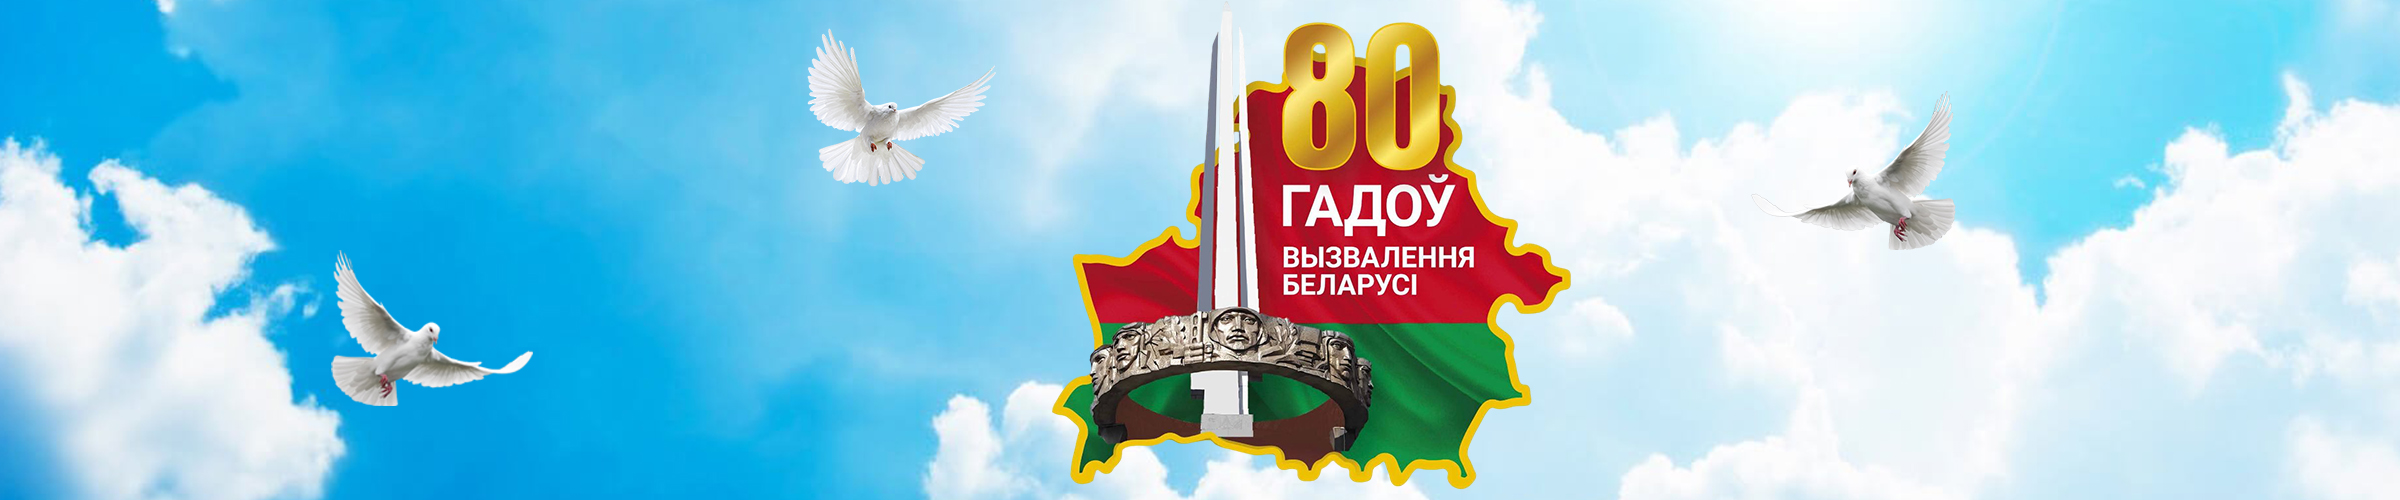 80-летие освобождения Беларуси